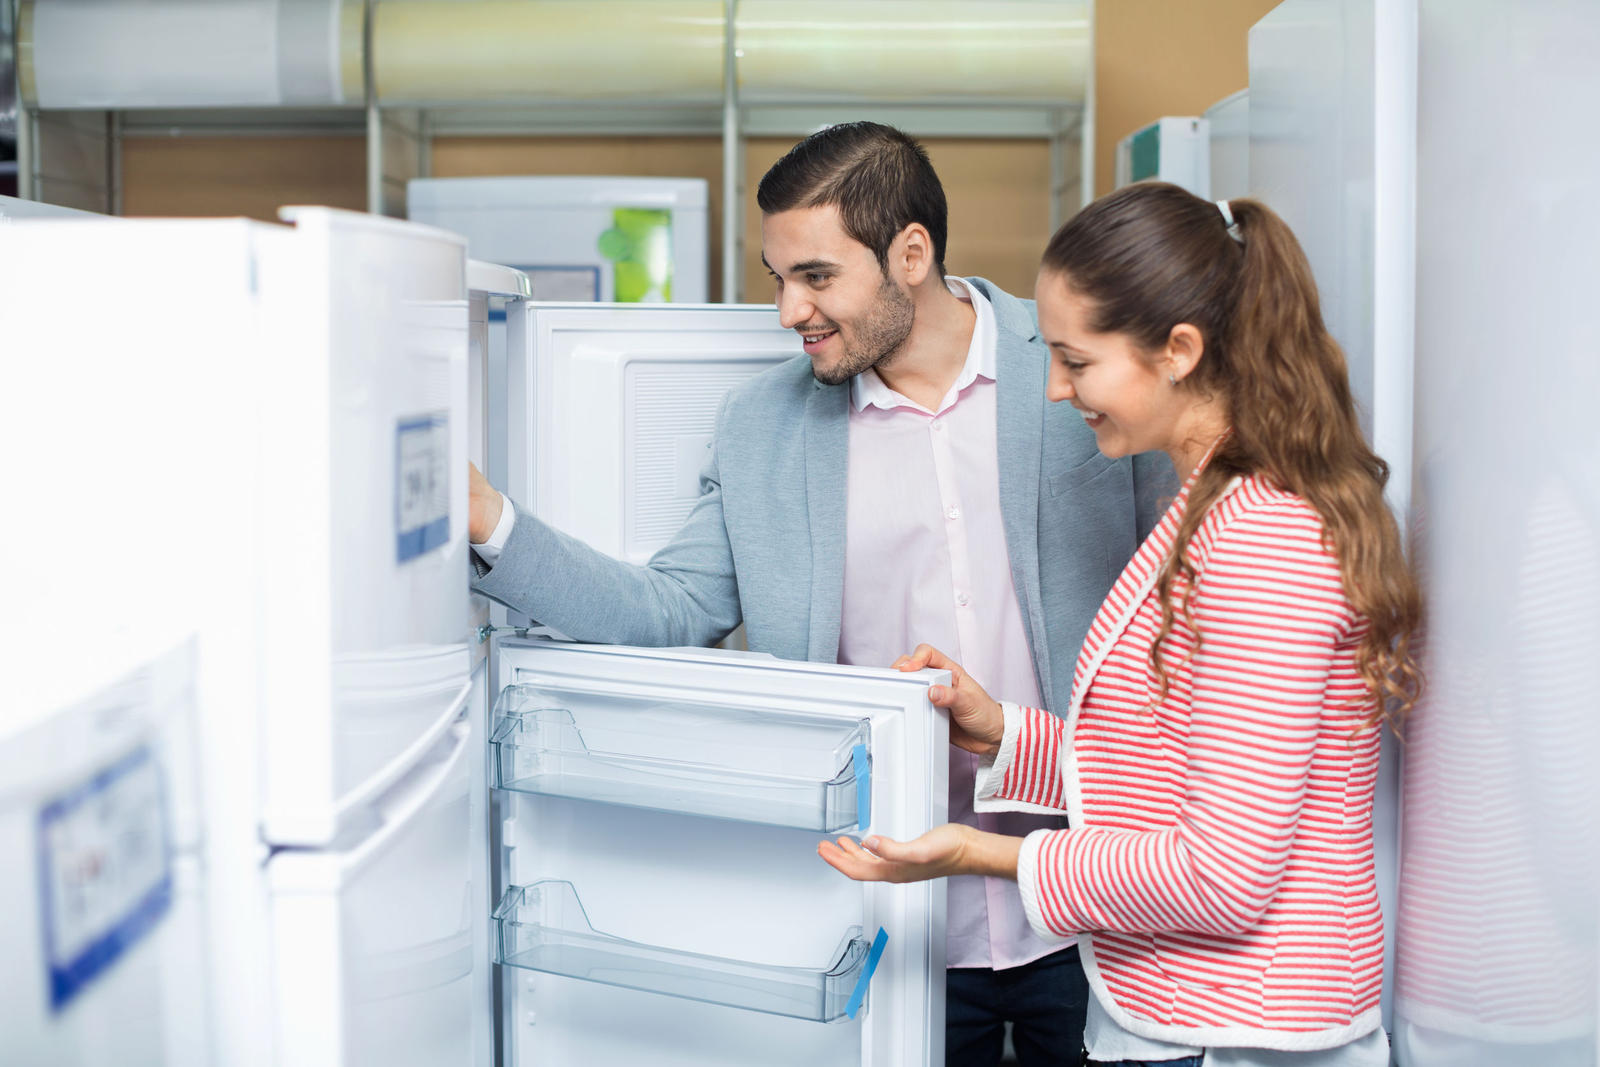 Сток холодильника. Холодильник. Бытовой техники холодильник. Новый холодильник. Выбор холодильника.